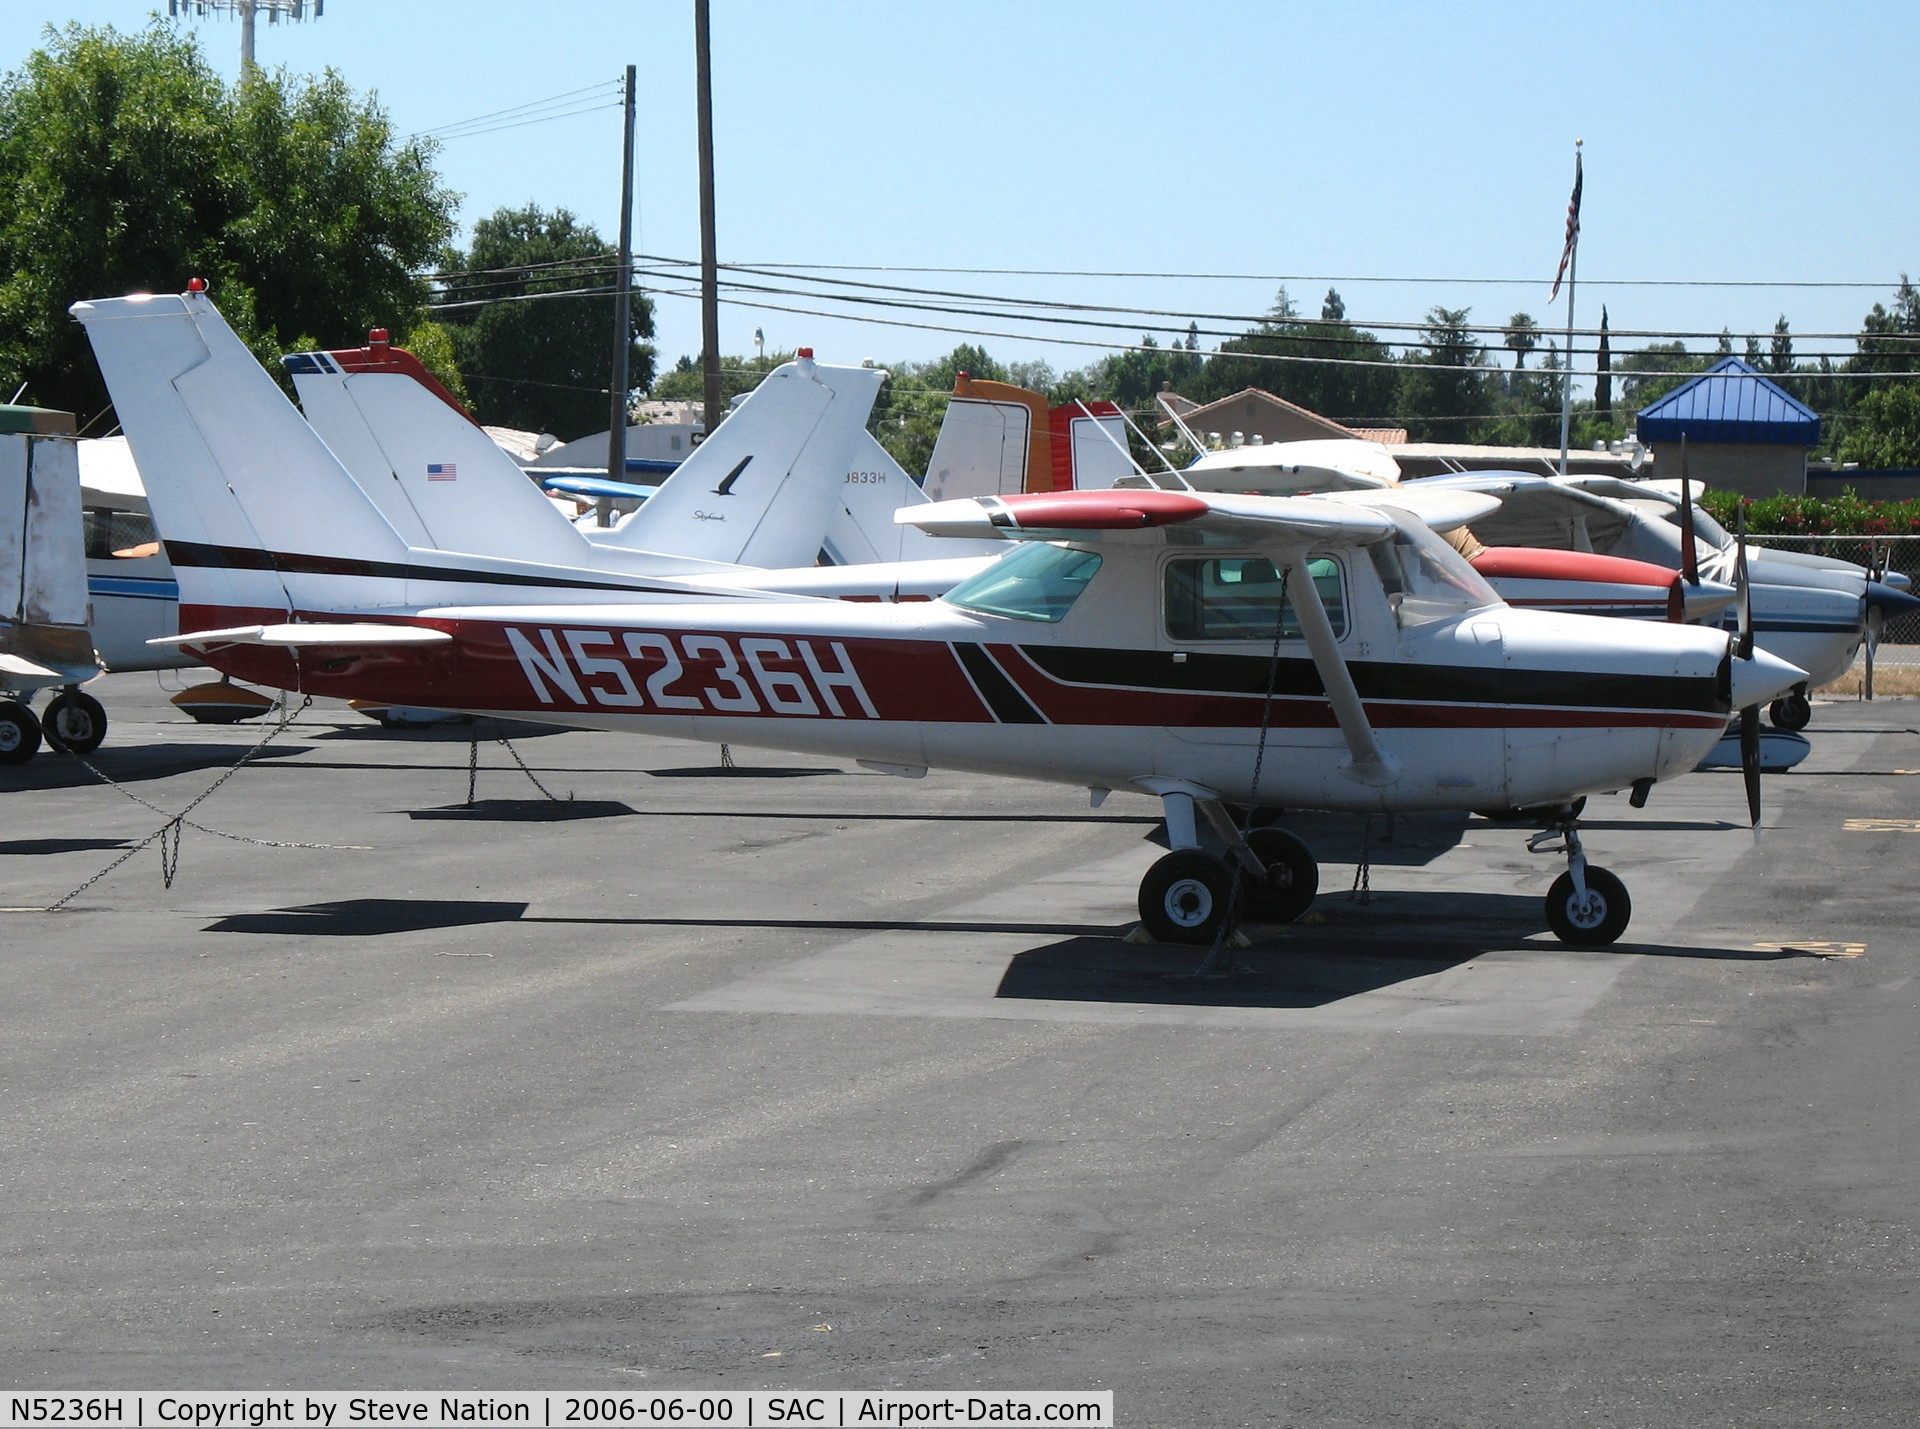 N5236H, 1979 Cessna 152 C/N 15284070, Carter Flygare Inc. 1979 Cessna 152 @ Sacramento Executive Airport, CA